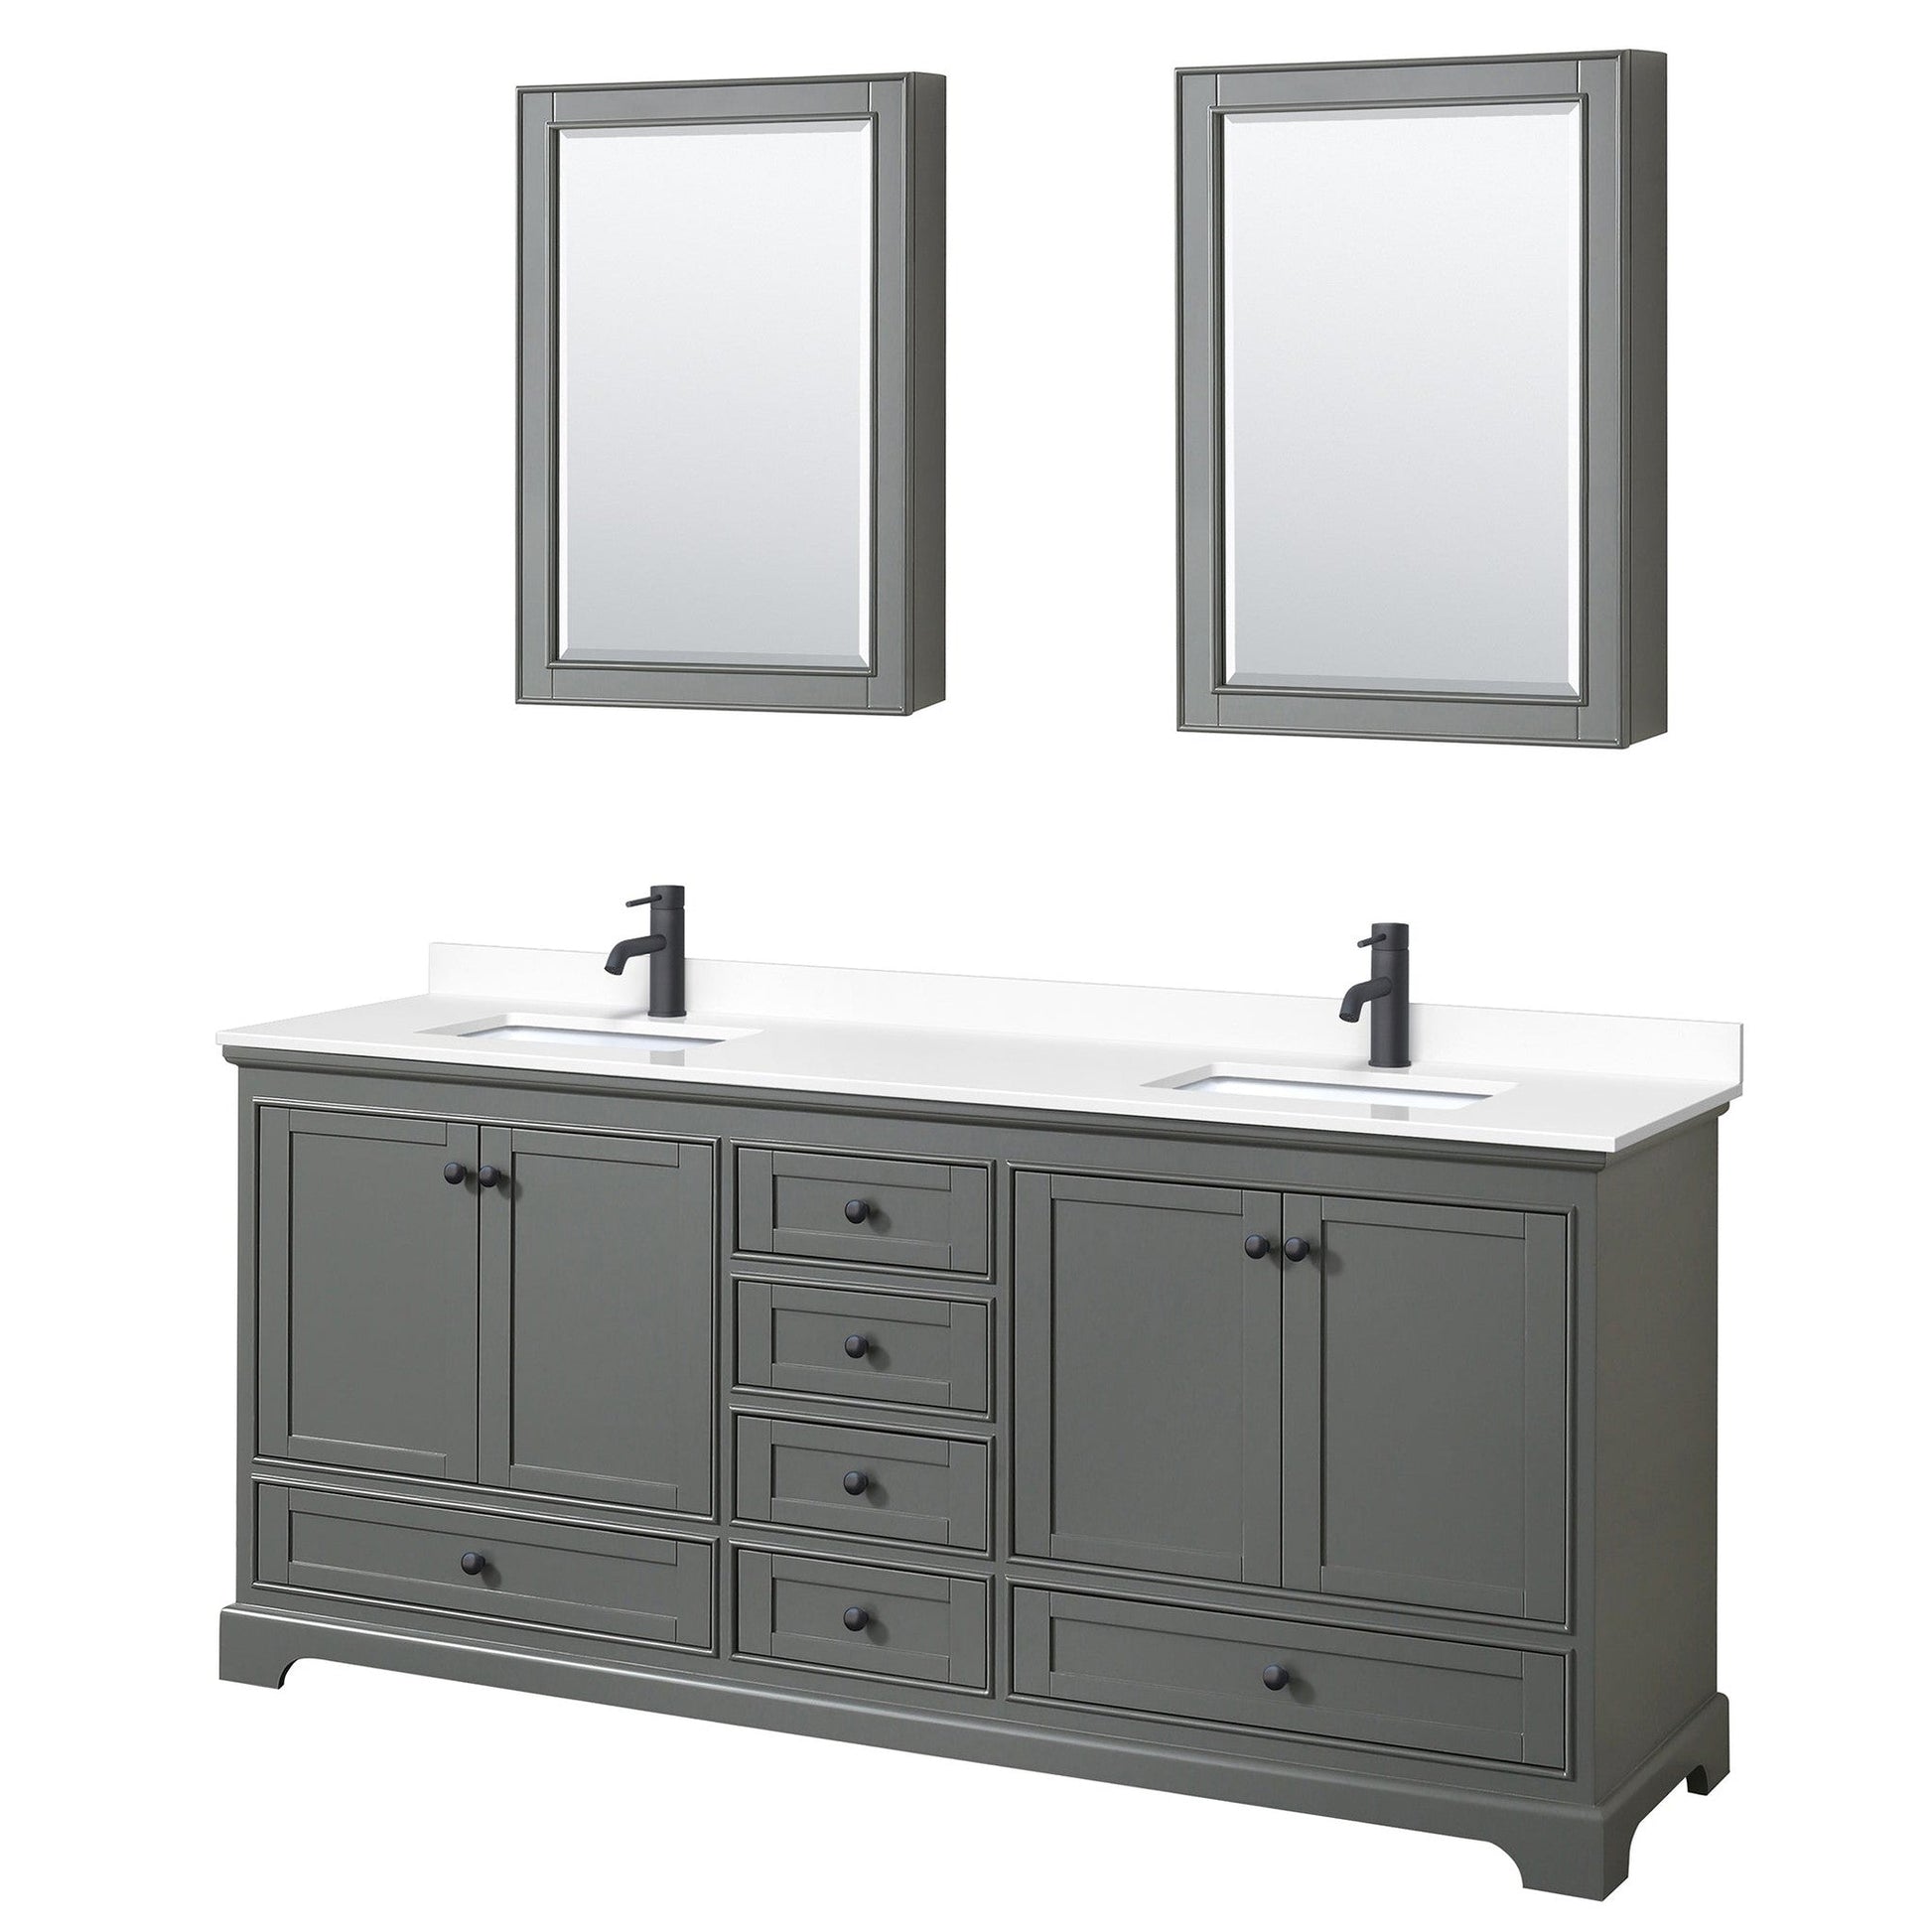 Deborah 80" Double Bathroom Vanity in Dark Gray, White Cultured Marble Countertop, Undermount Square Sinks, Matte Black Trim, Medicine Cabinets